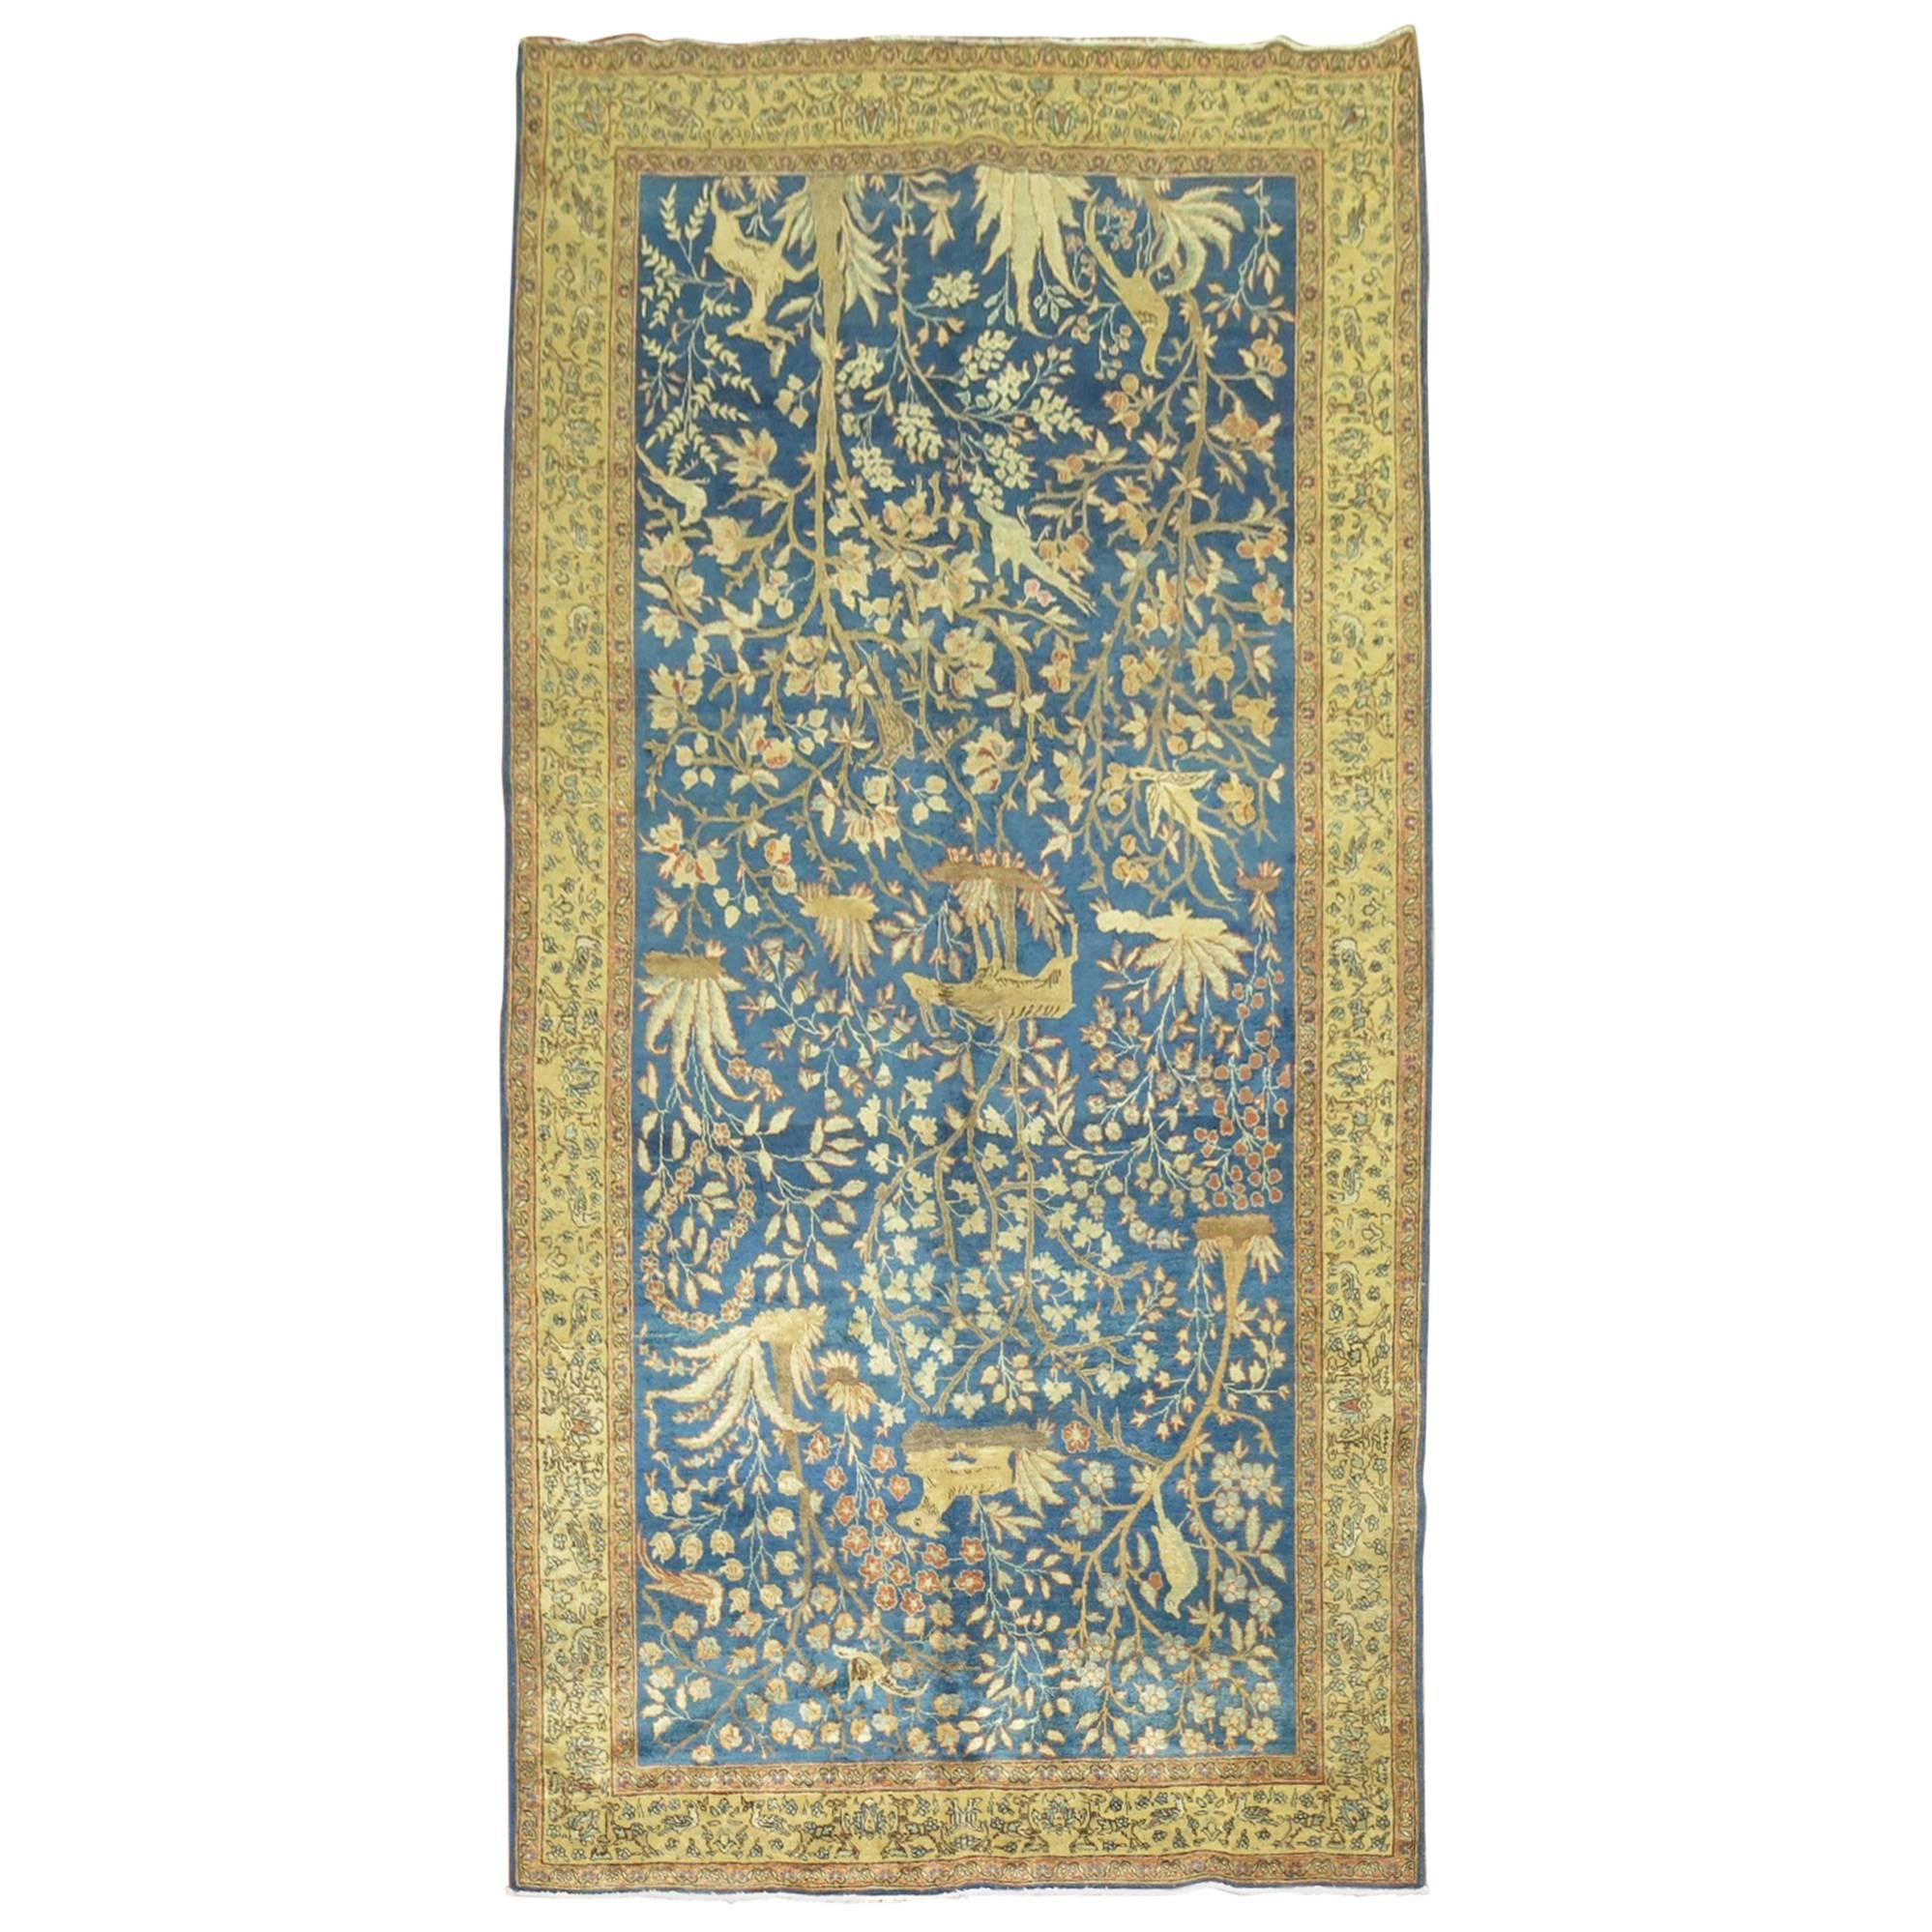 Pictorial Antique Persian Tabriz Carpet in Blue